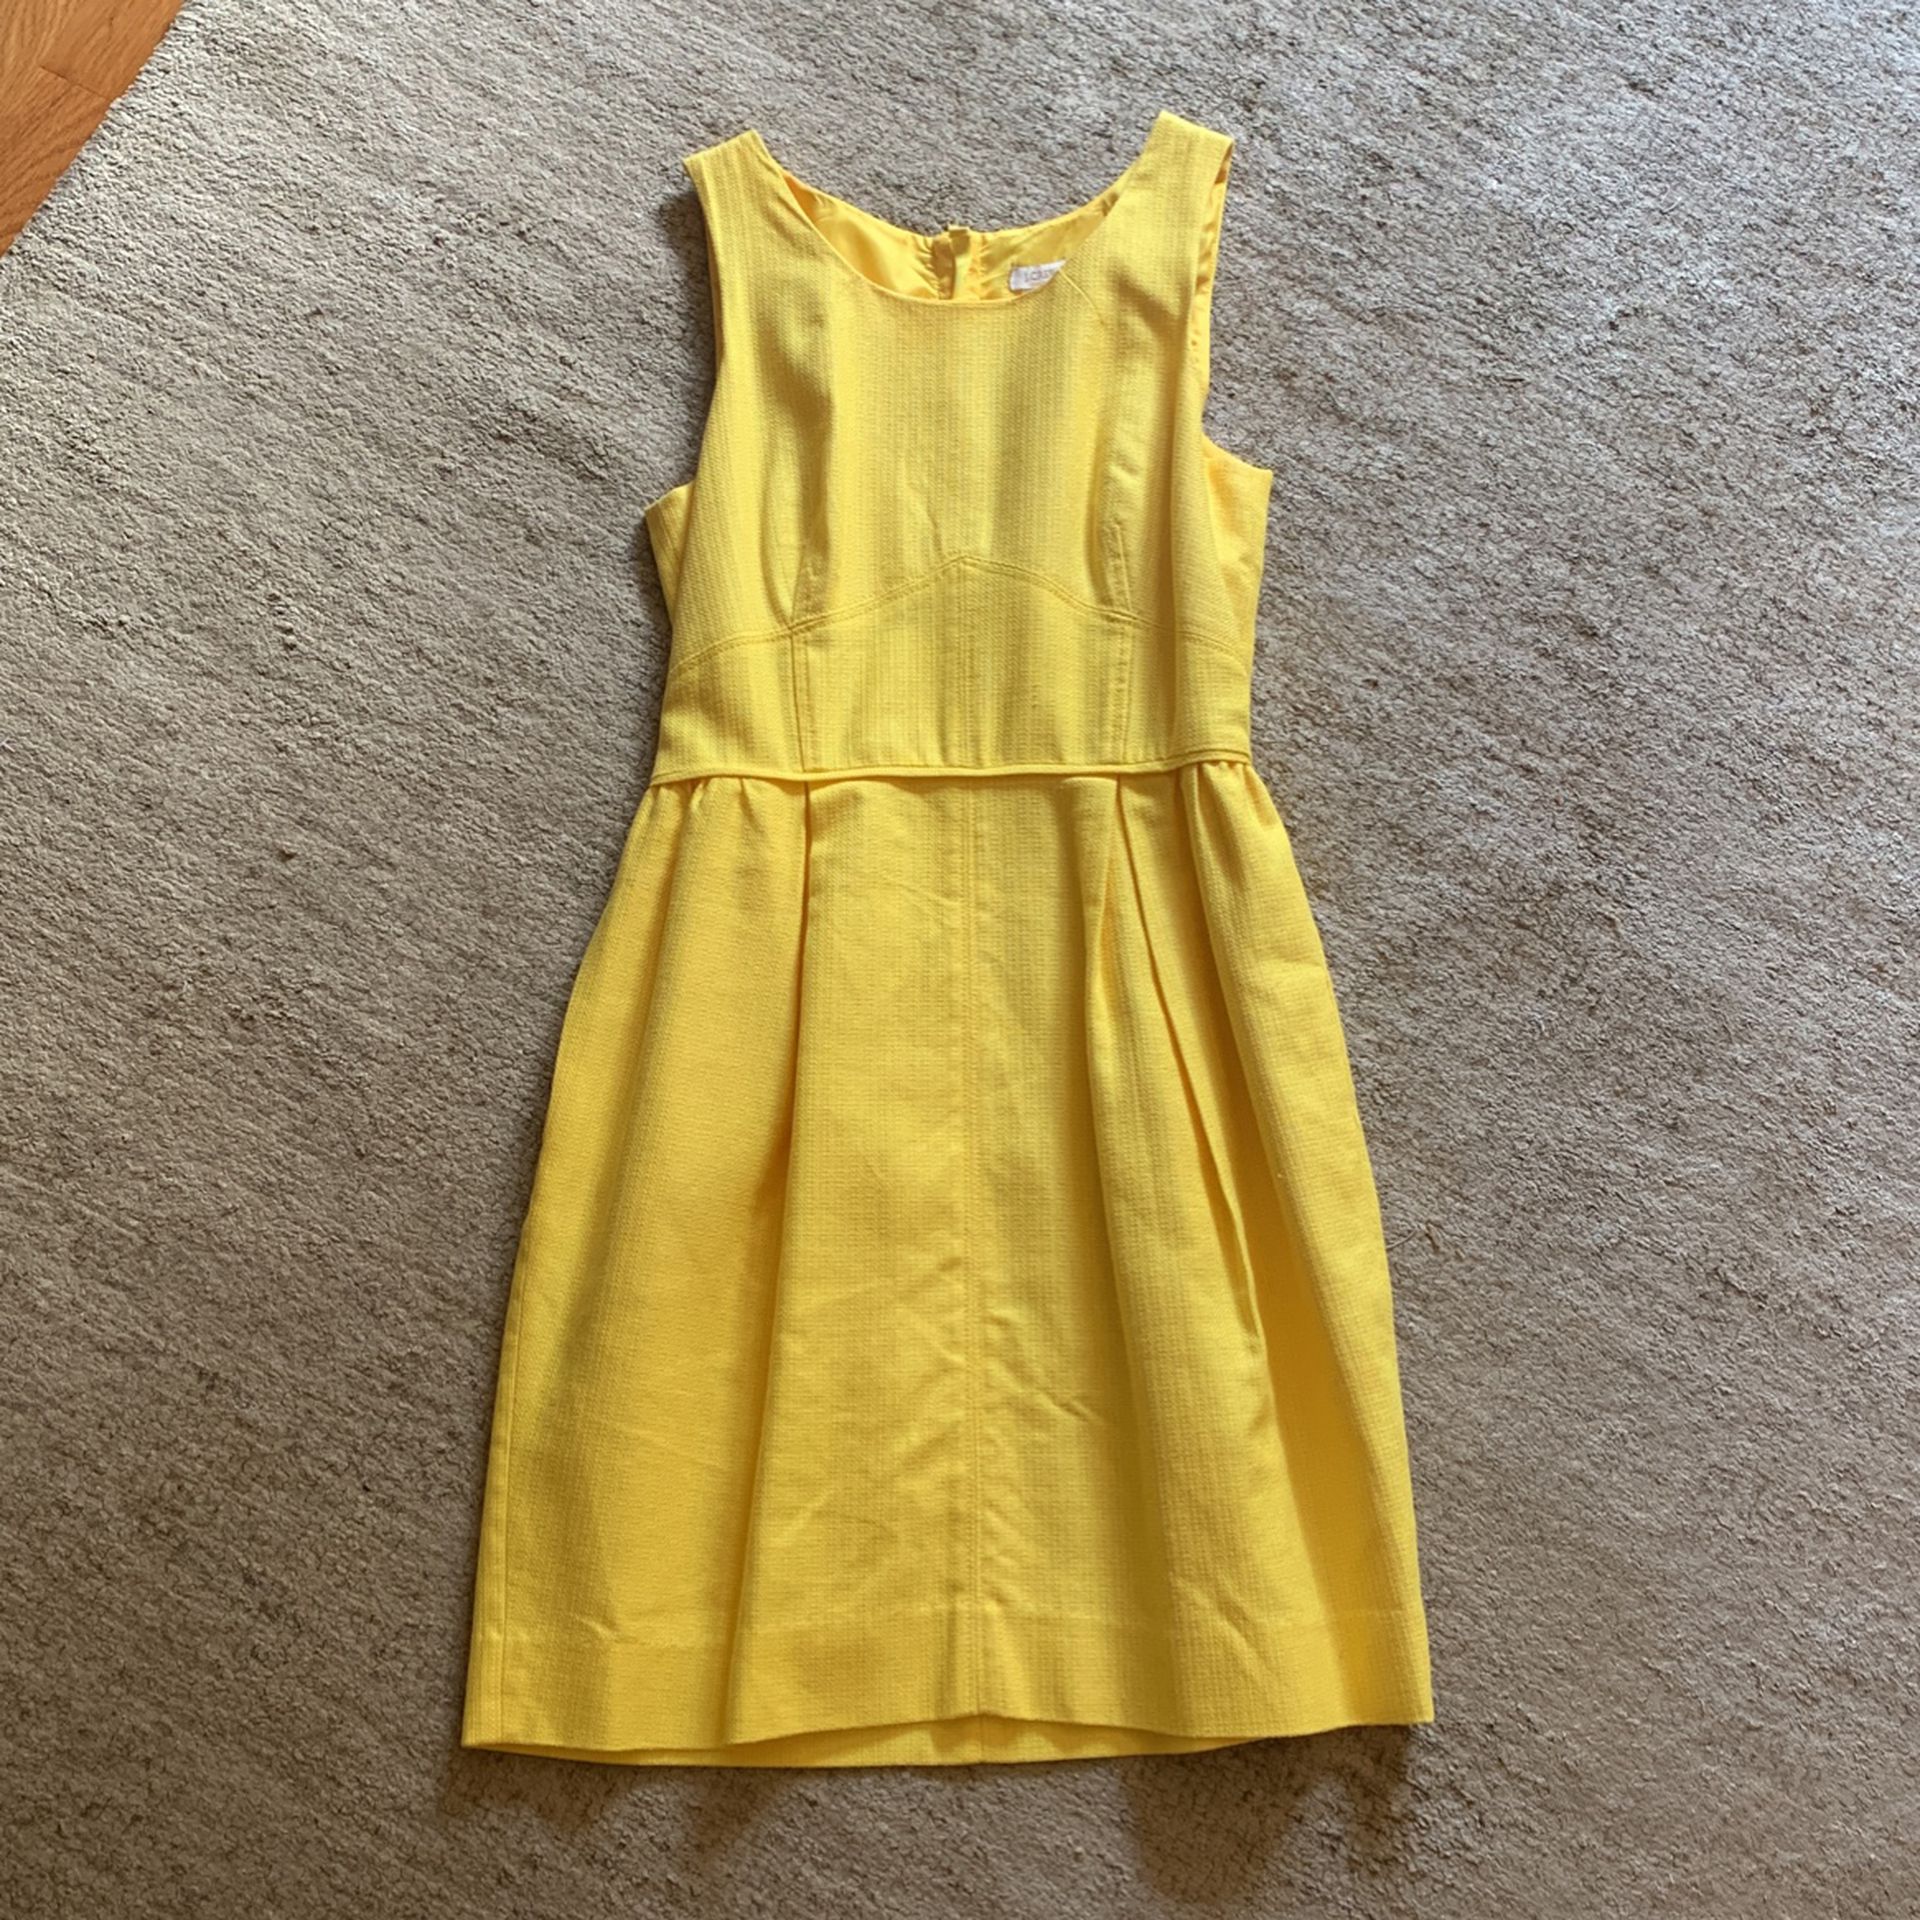 JCrew Yellow Dress 